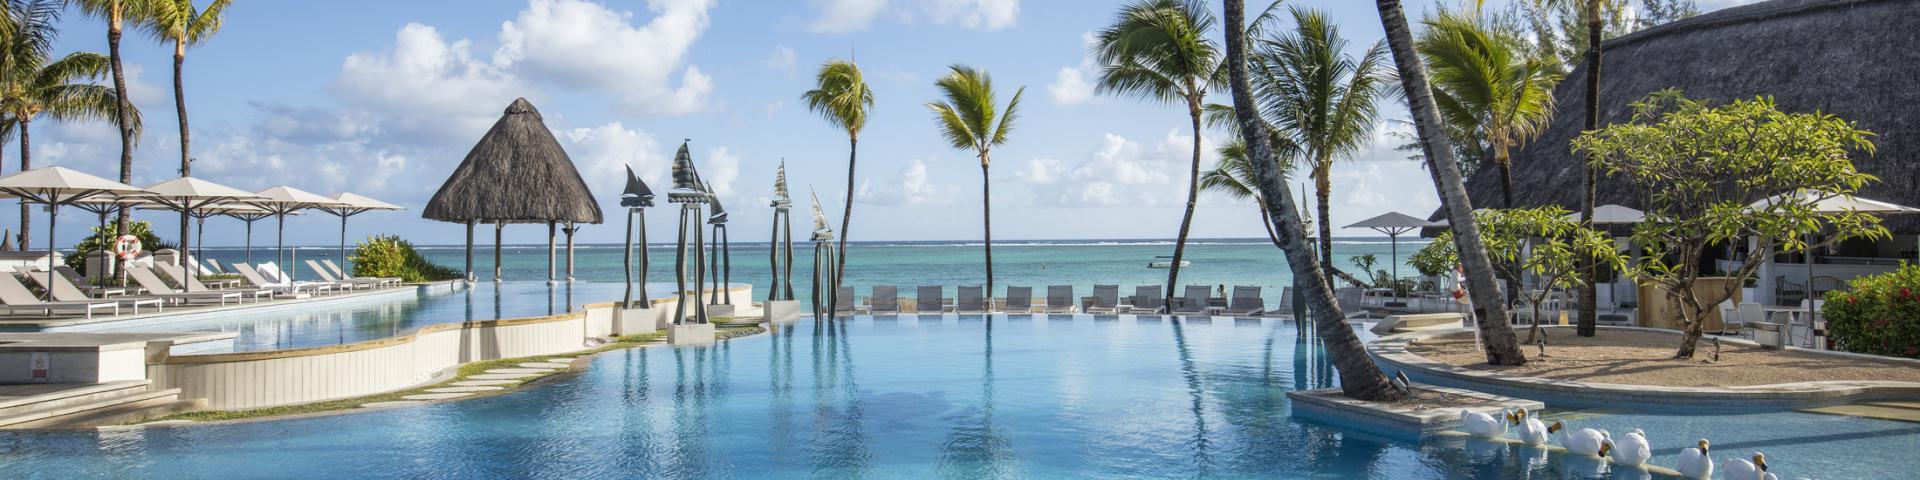 Ambre Hotel - ekskluzywne wakacje All Inclusive na Mauritiusie